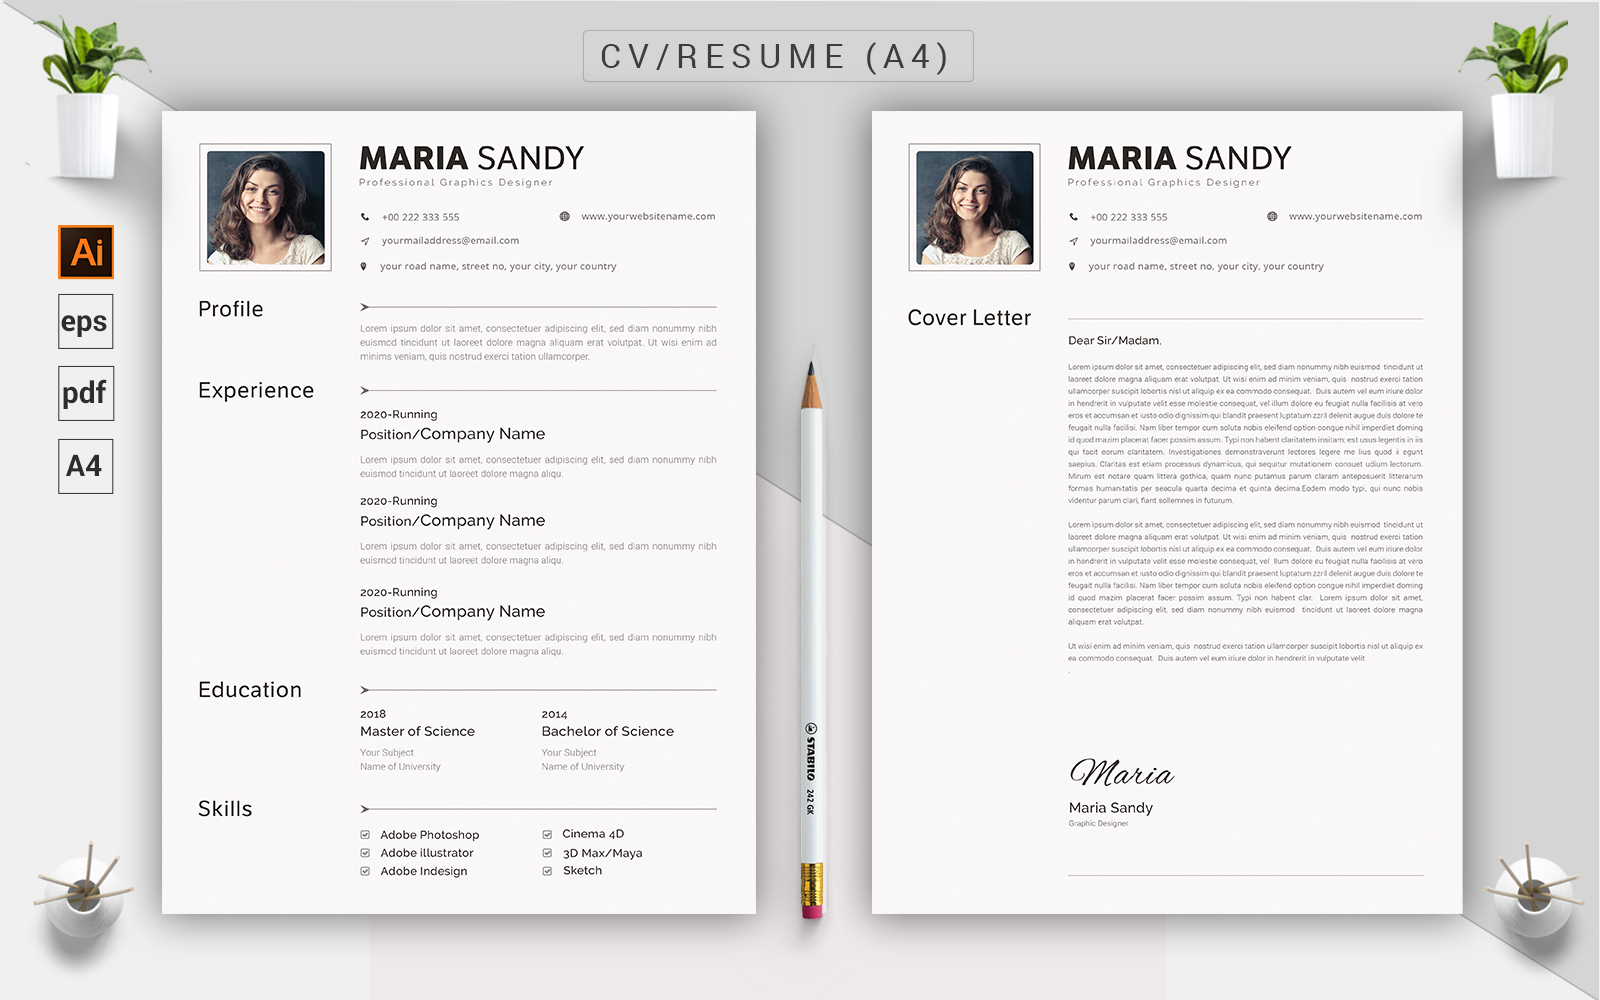 Maria Sandy - CV & Resume Template